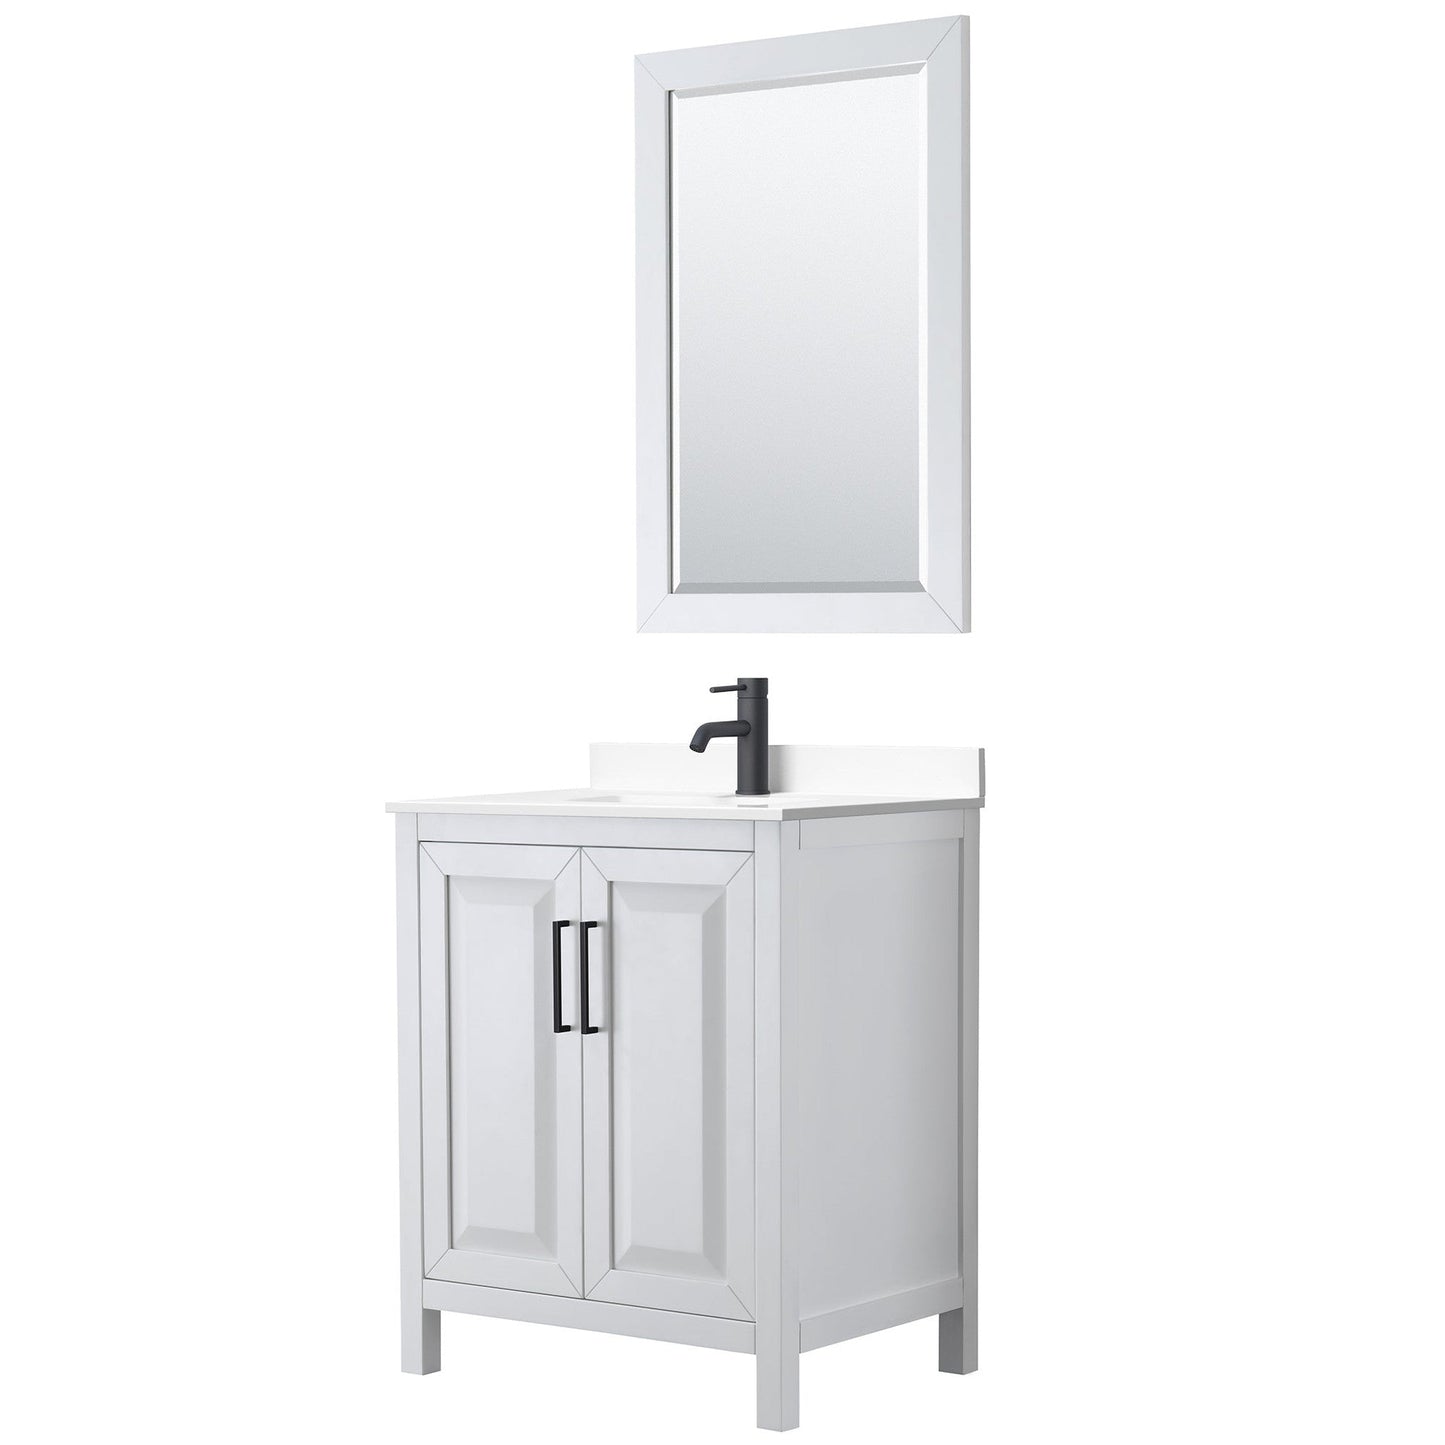 Daria 30" Single Bathroom Vanity in White, White Cultured Marble Countertop, Undermount Square Sink, Matte Black Trim, 24" Mirror